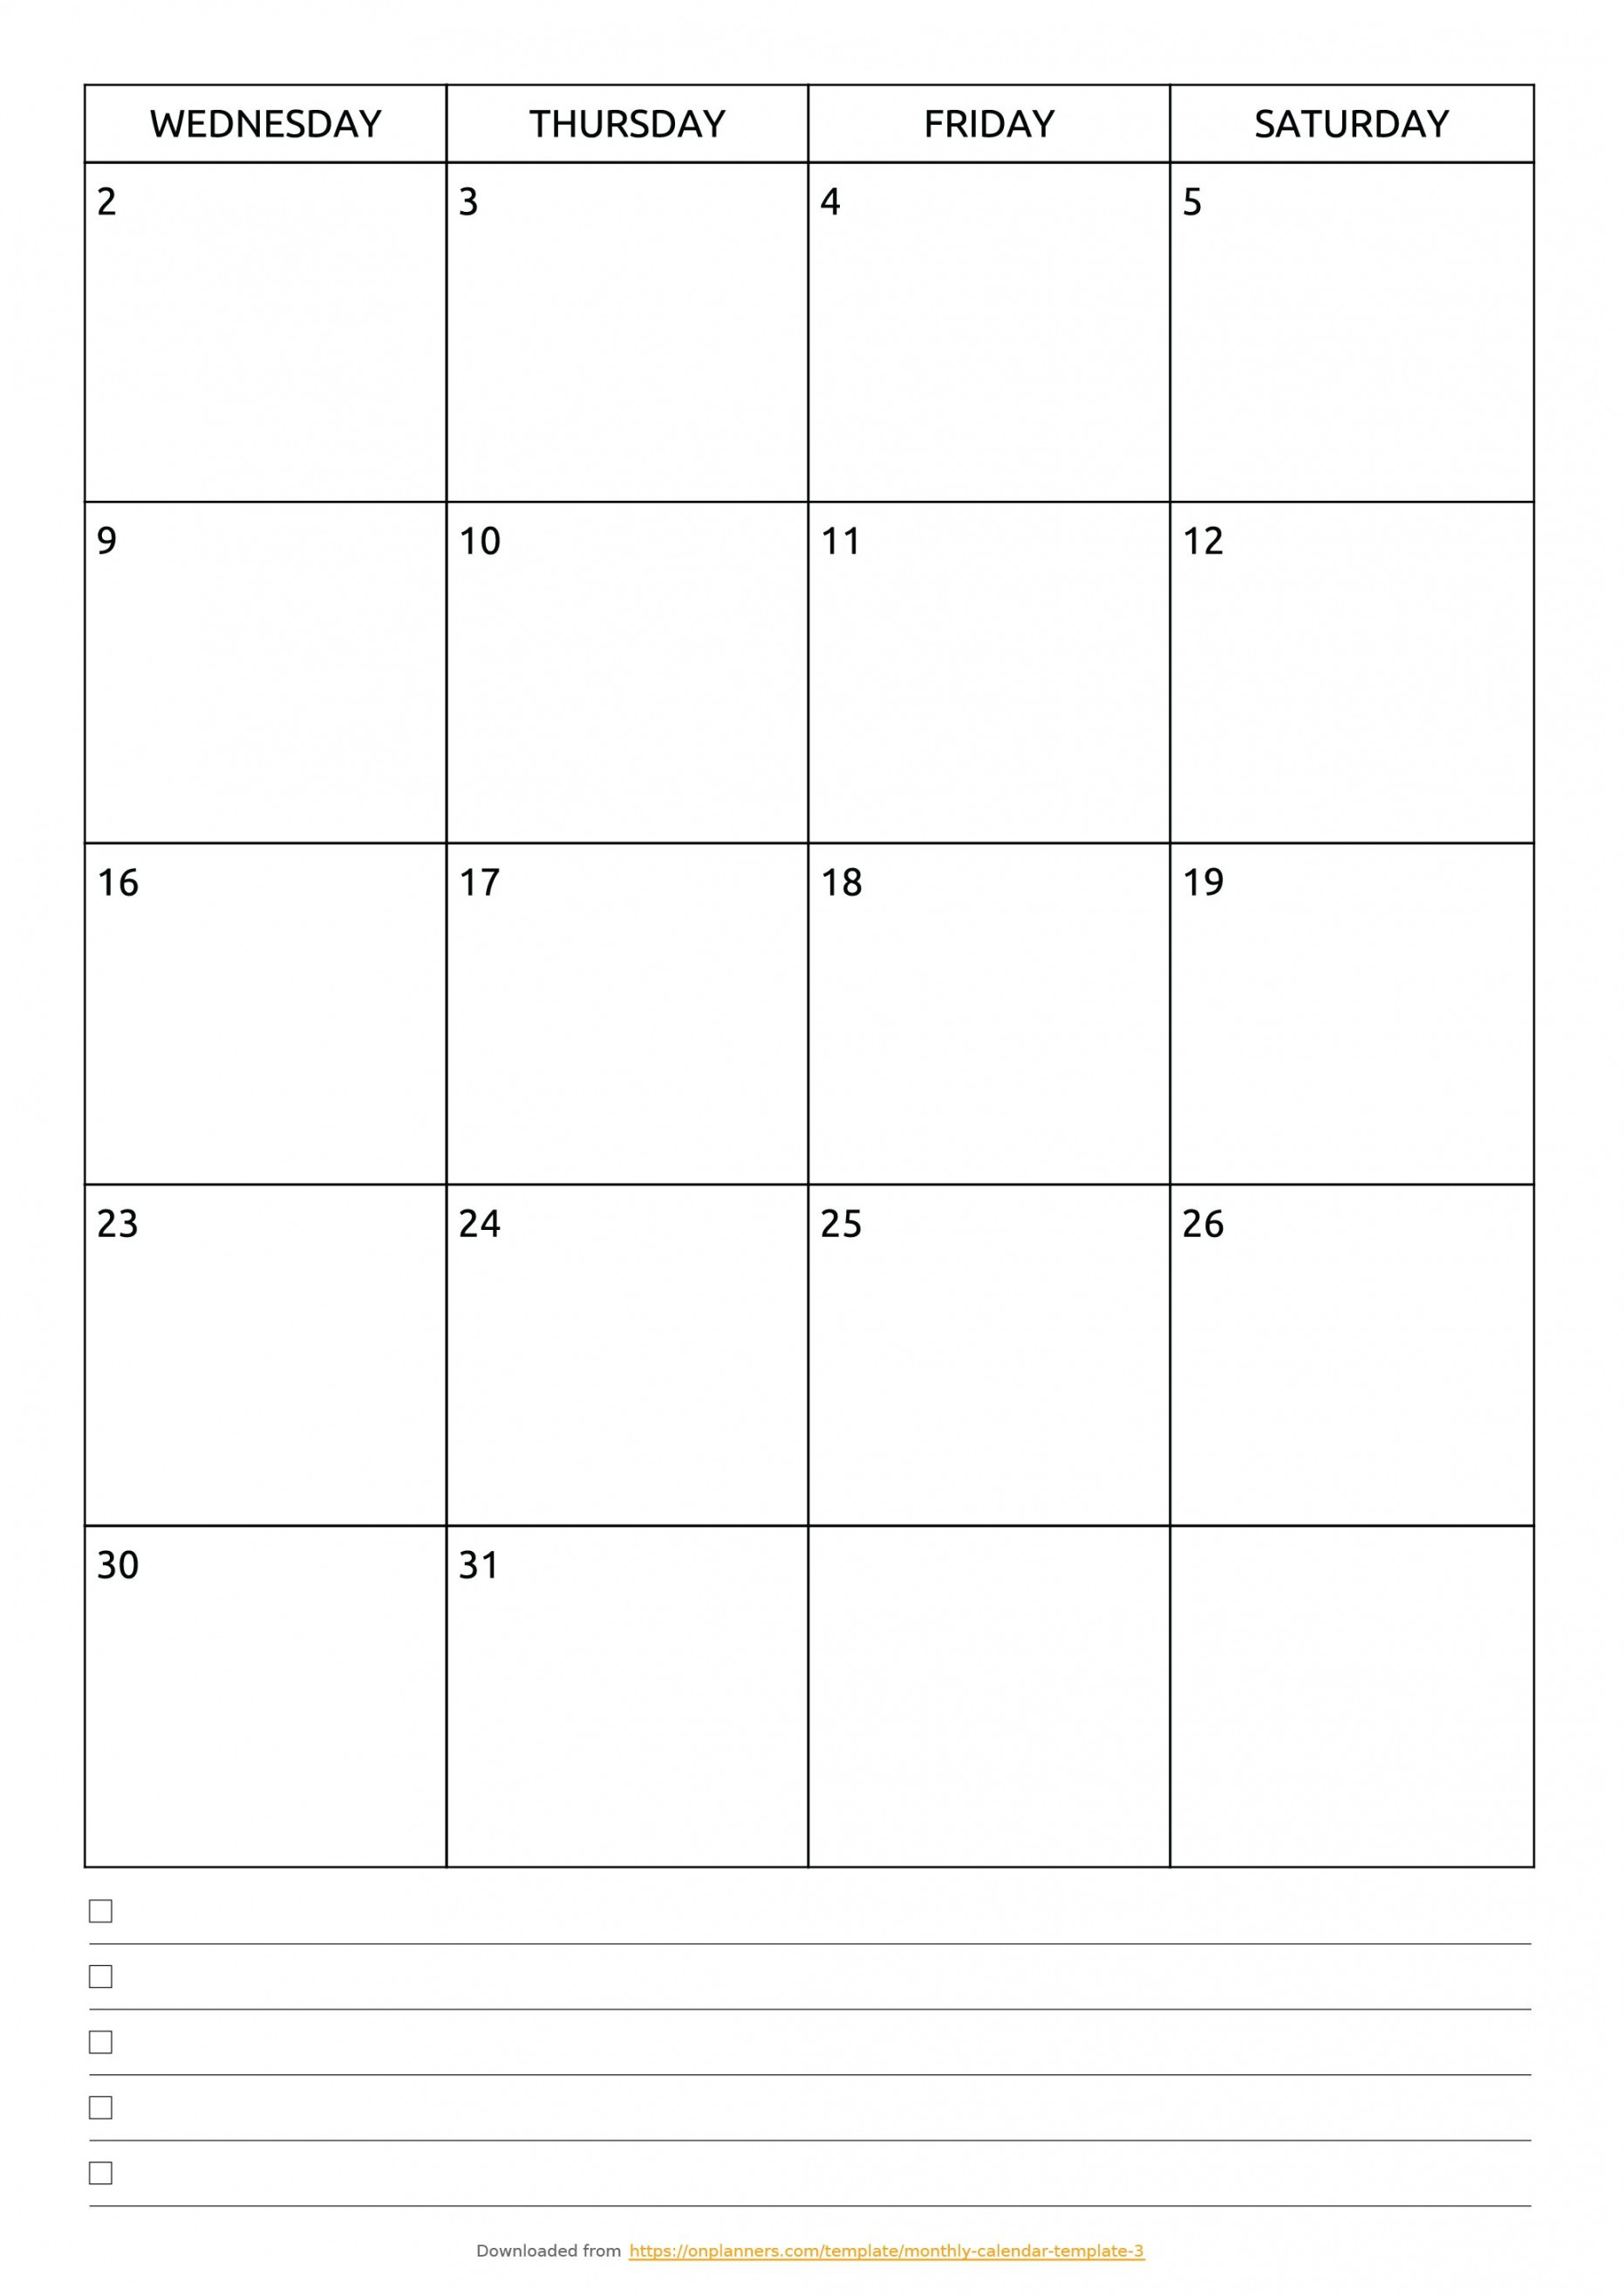 Free X Calendar Template  Blank monthly calendar, Blank